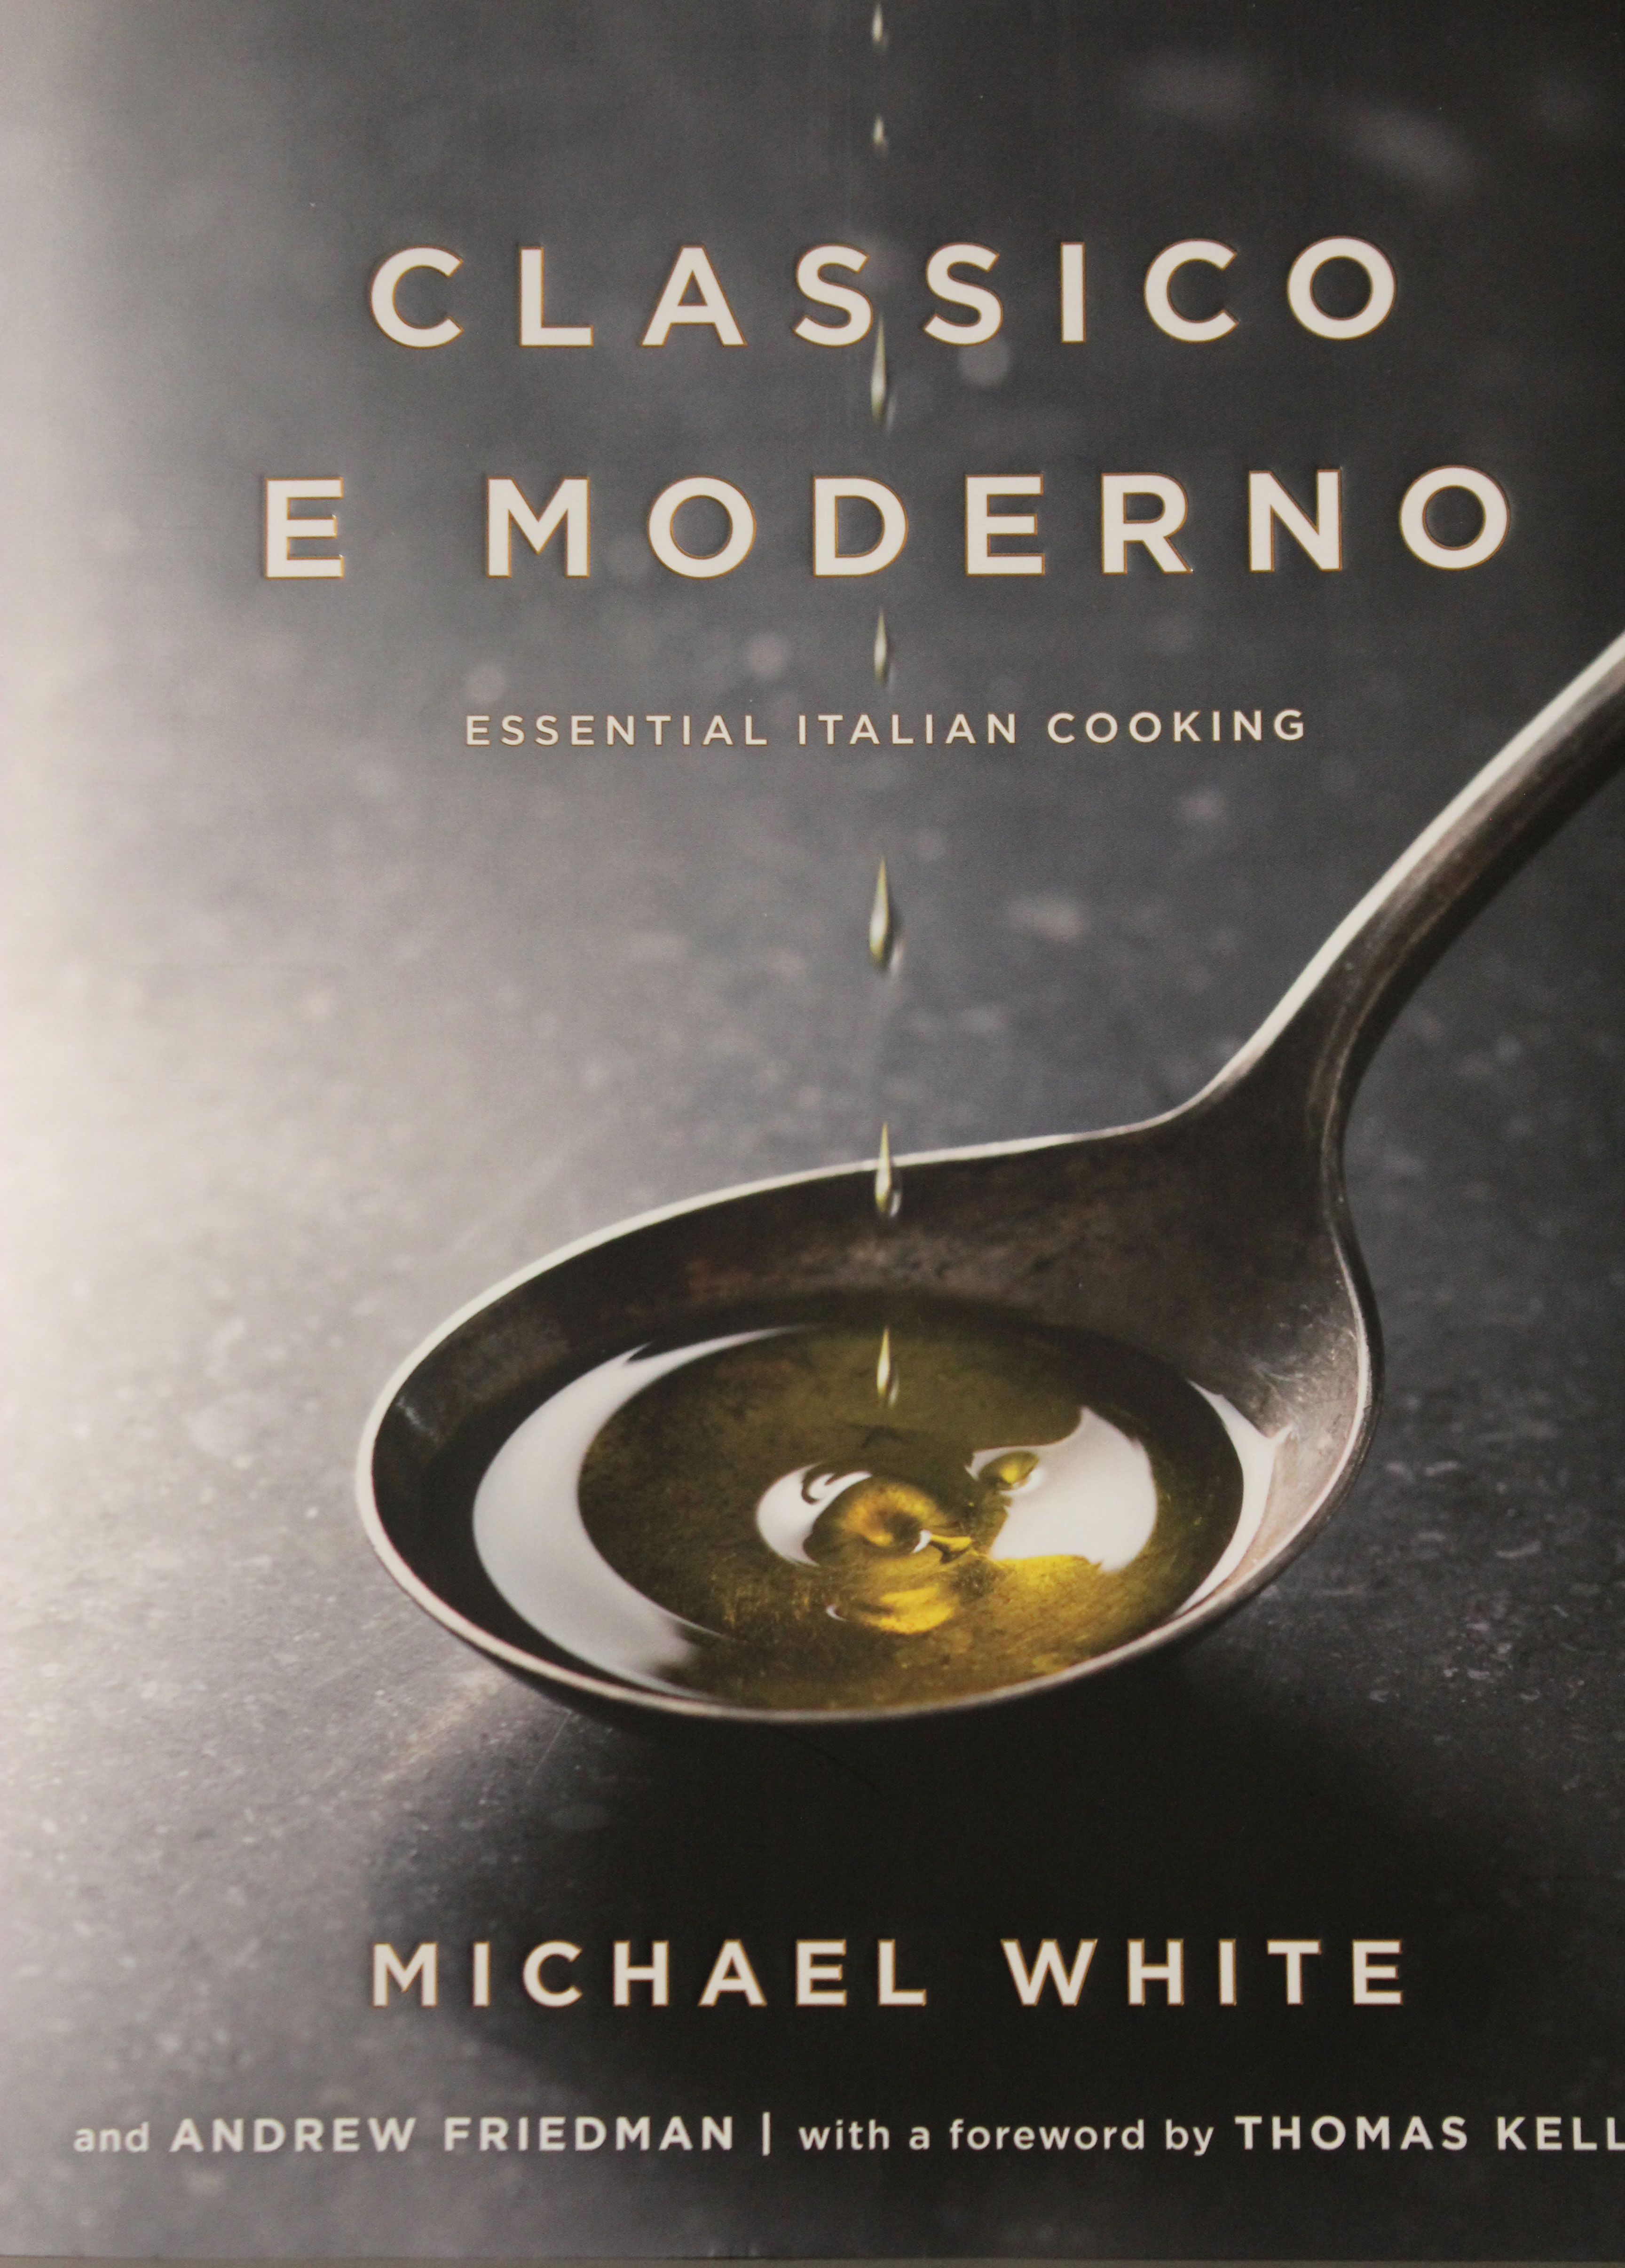 TBT Cookbook Review: Classico e Moderno by Michael White